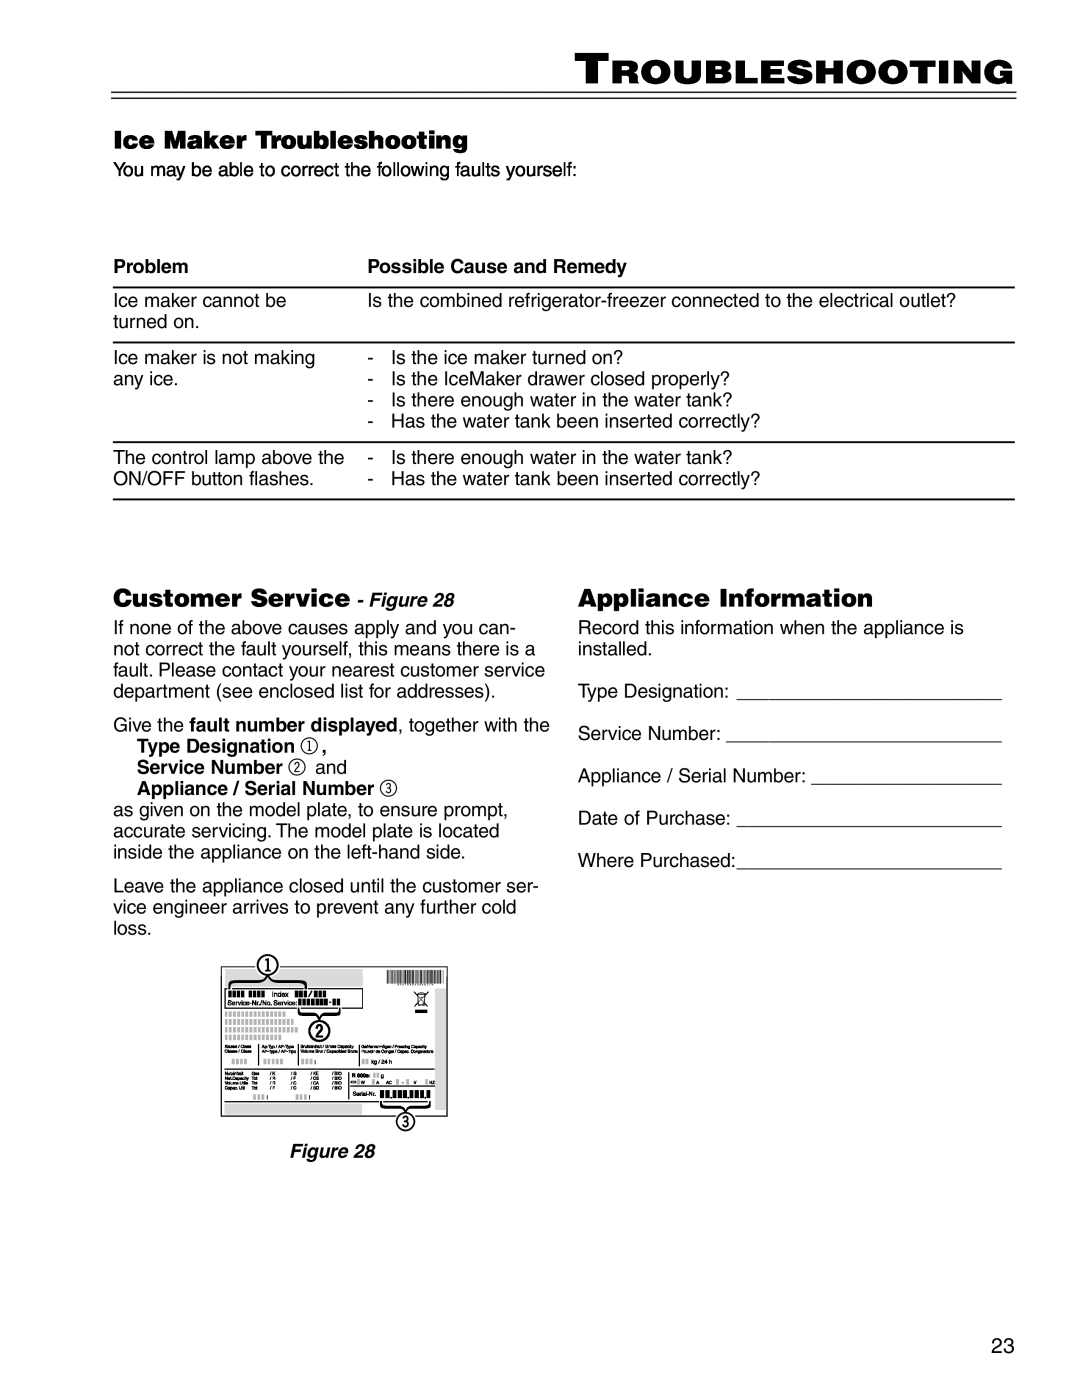 Liebherr CS 1640 7082 481-01 manual Ice Maker Troubleshooting, Customer Service - Figure, Appliance Information 